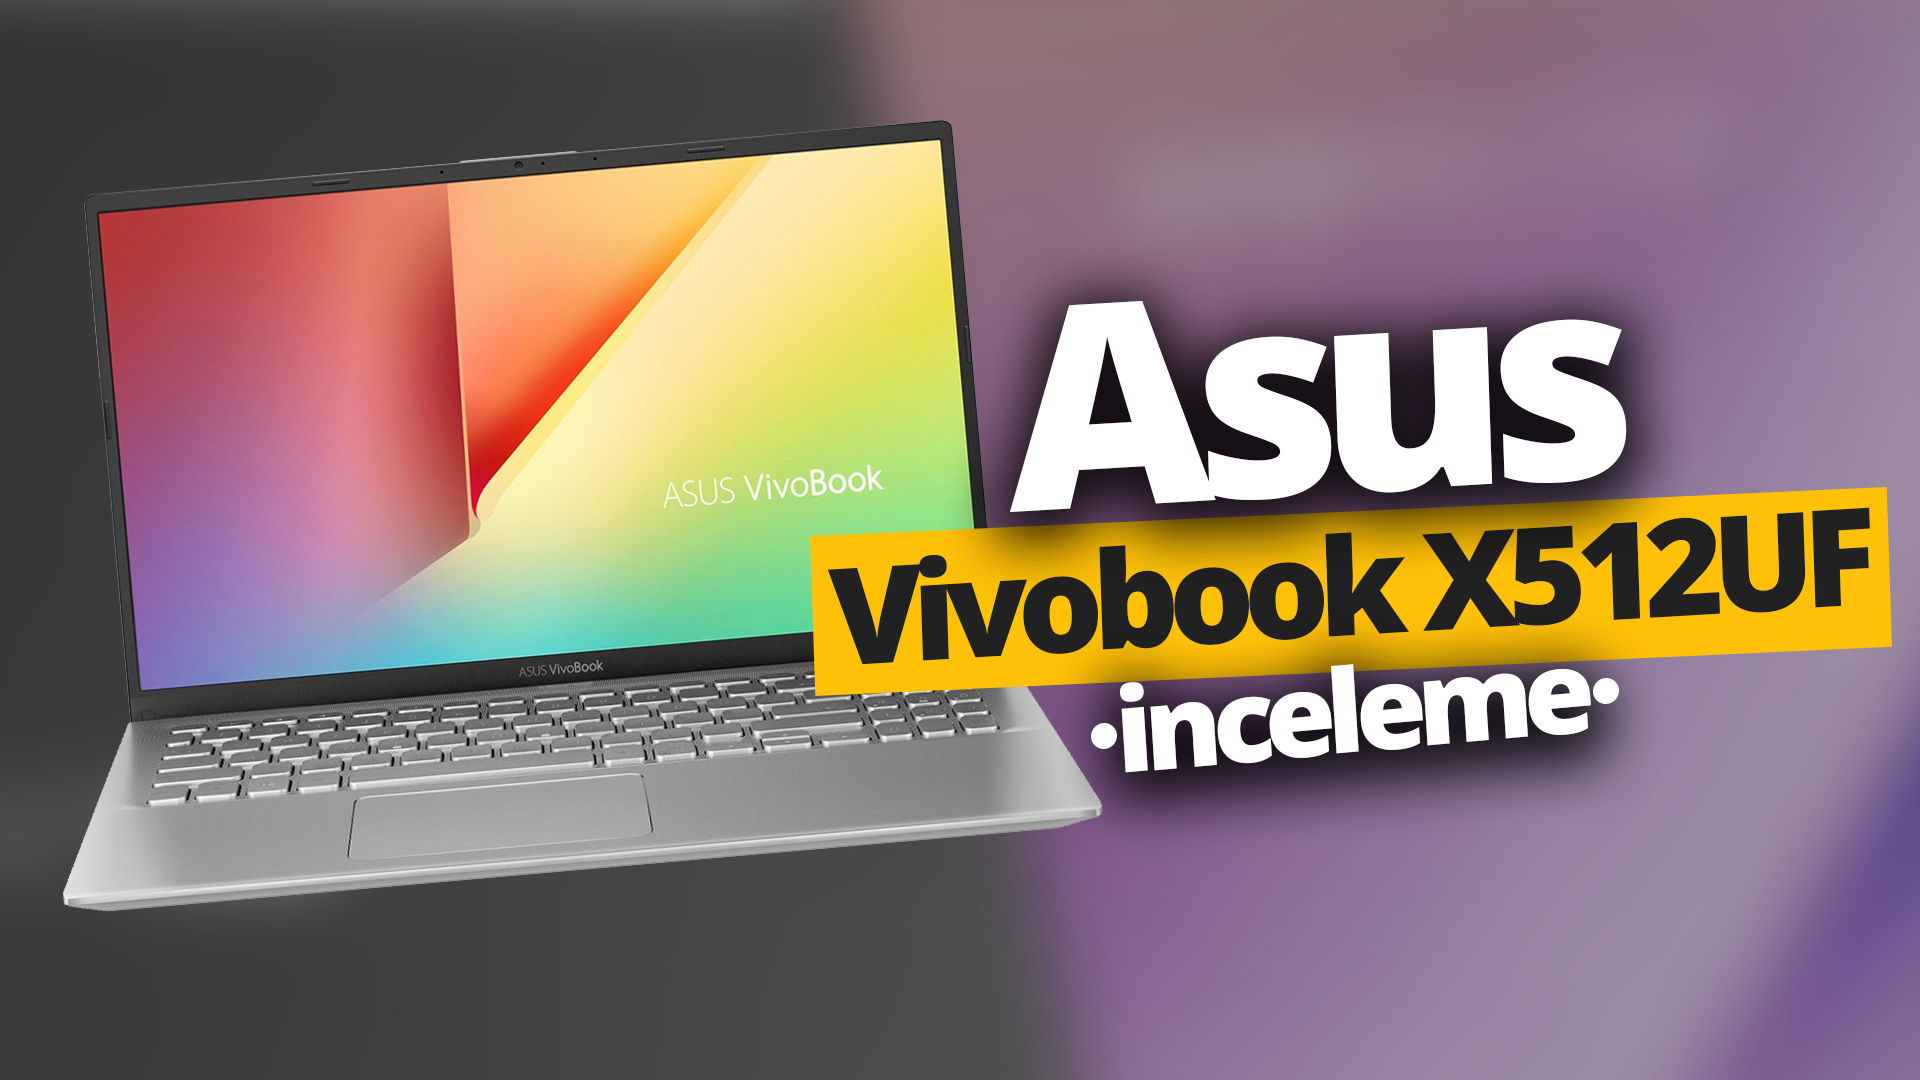 Asus Vivobook X512UF inceleme (VİDEO)